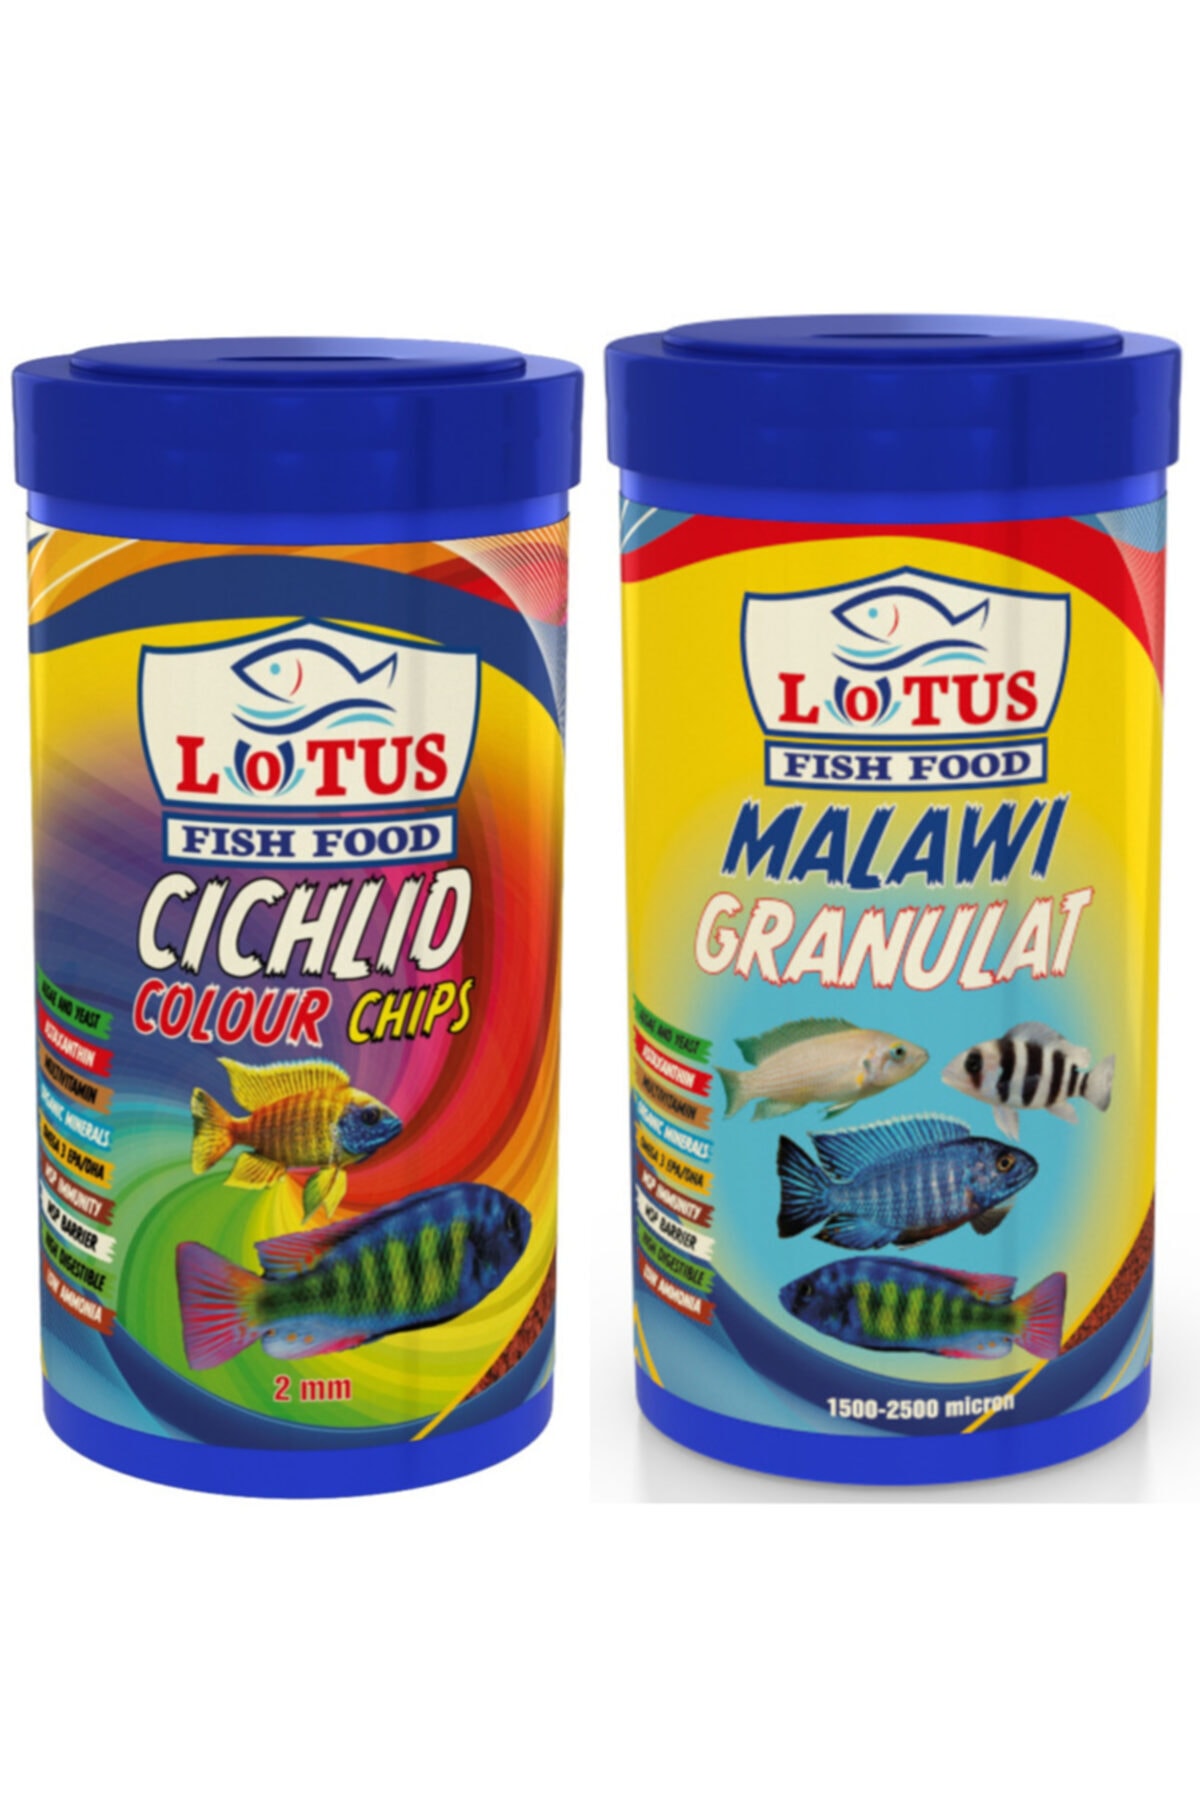 Lotus Cichlid Colour Chips 1000 Ml Ve Malawi Granulat 1000 Ml Balık Yemi